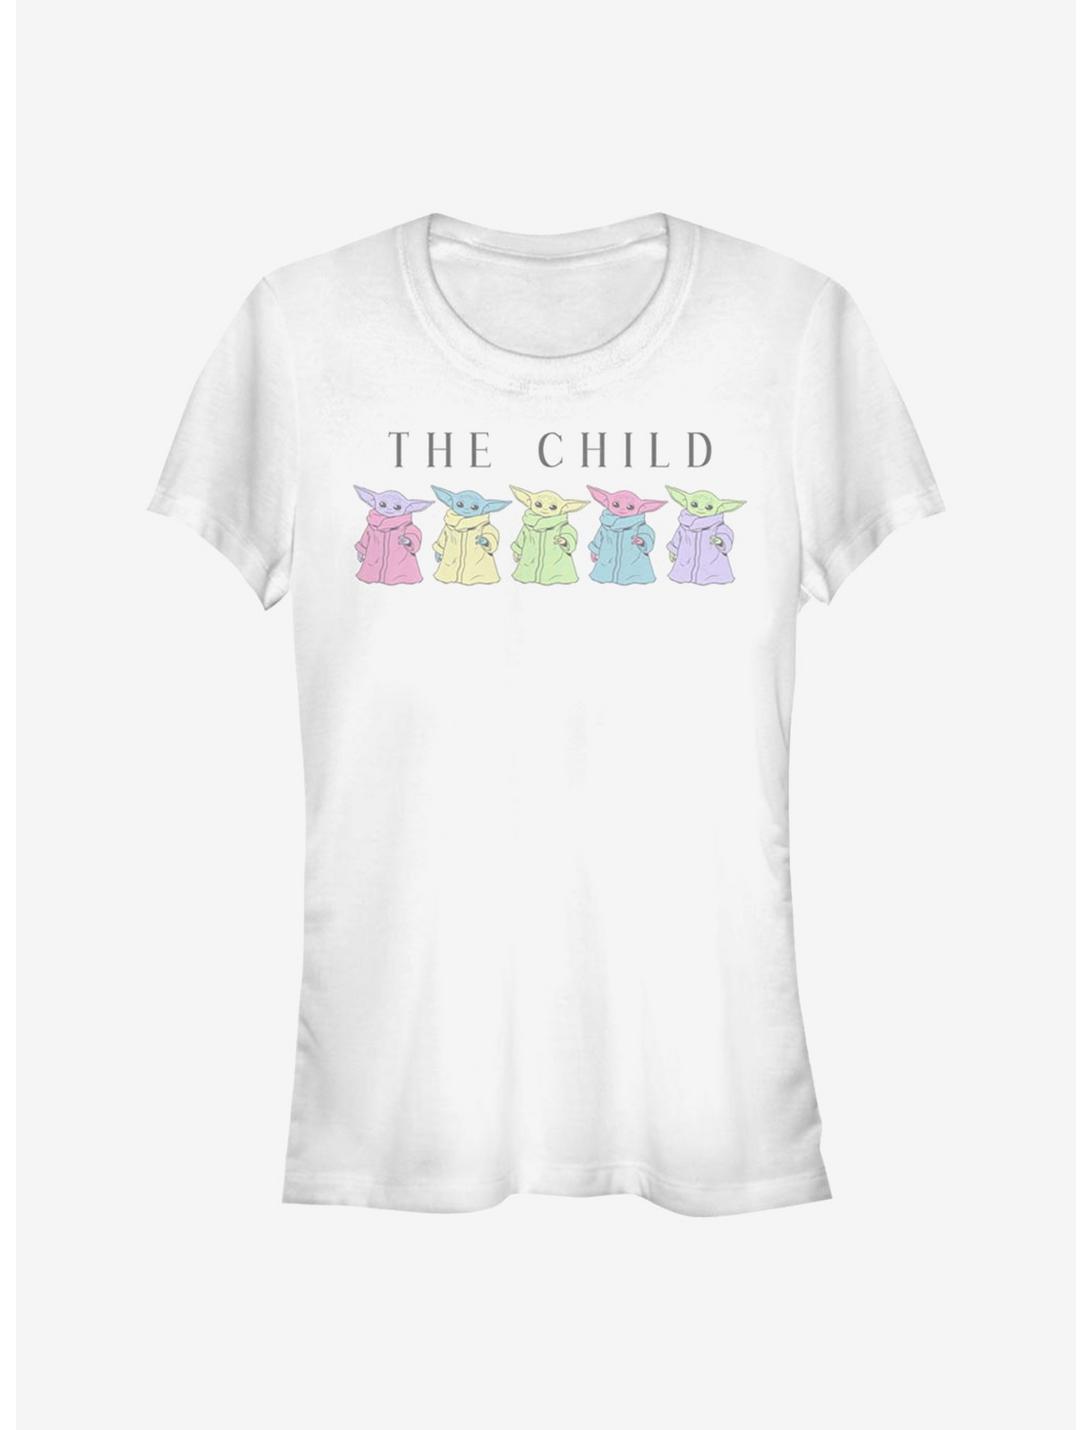 Star Wars The Mandalorian Multicolor The Child Girls T-Shirt, WHITE, hi-res